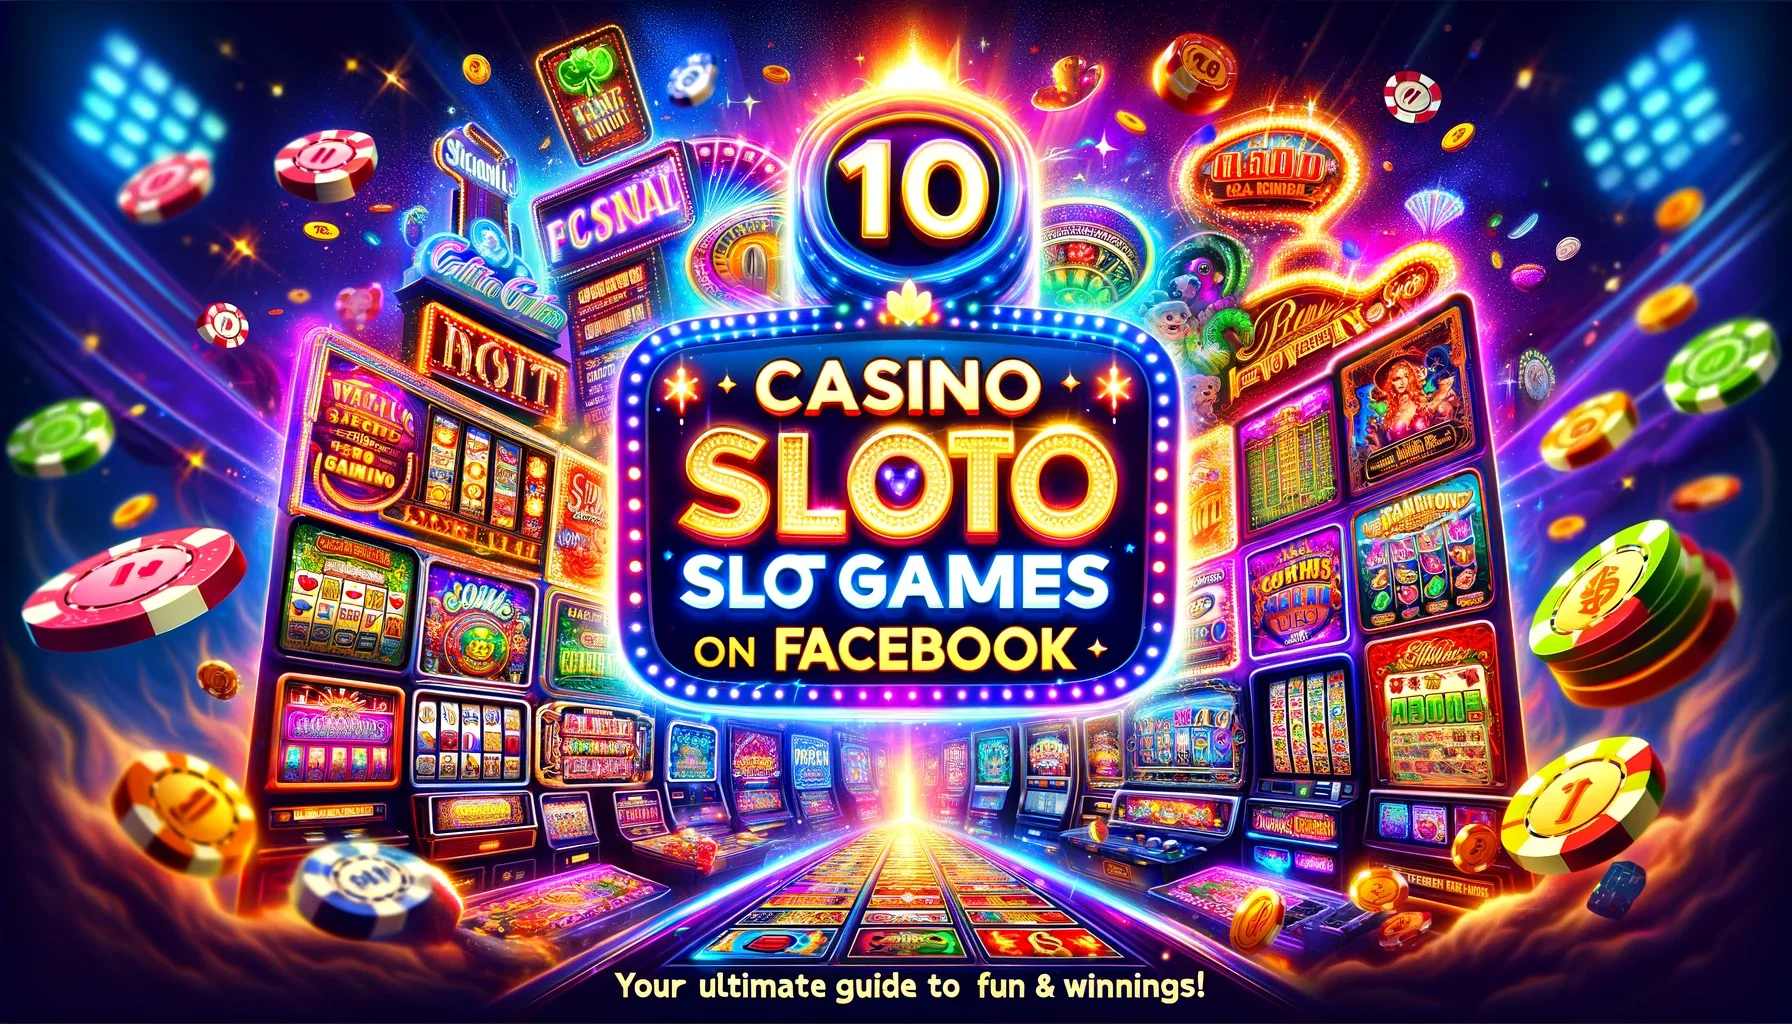 Top 10 Casino Slot Games on Facebook